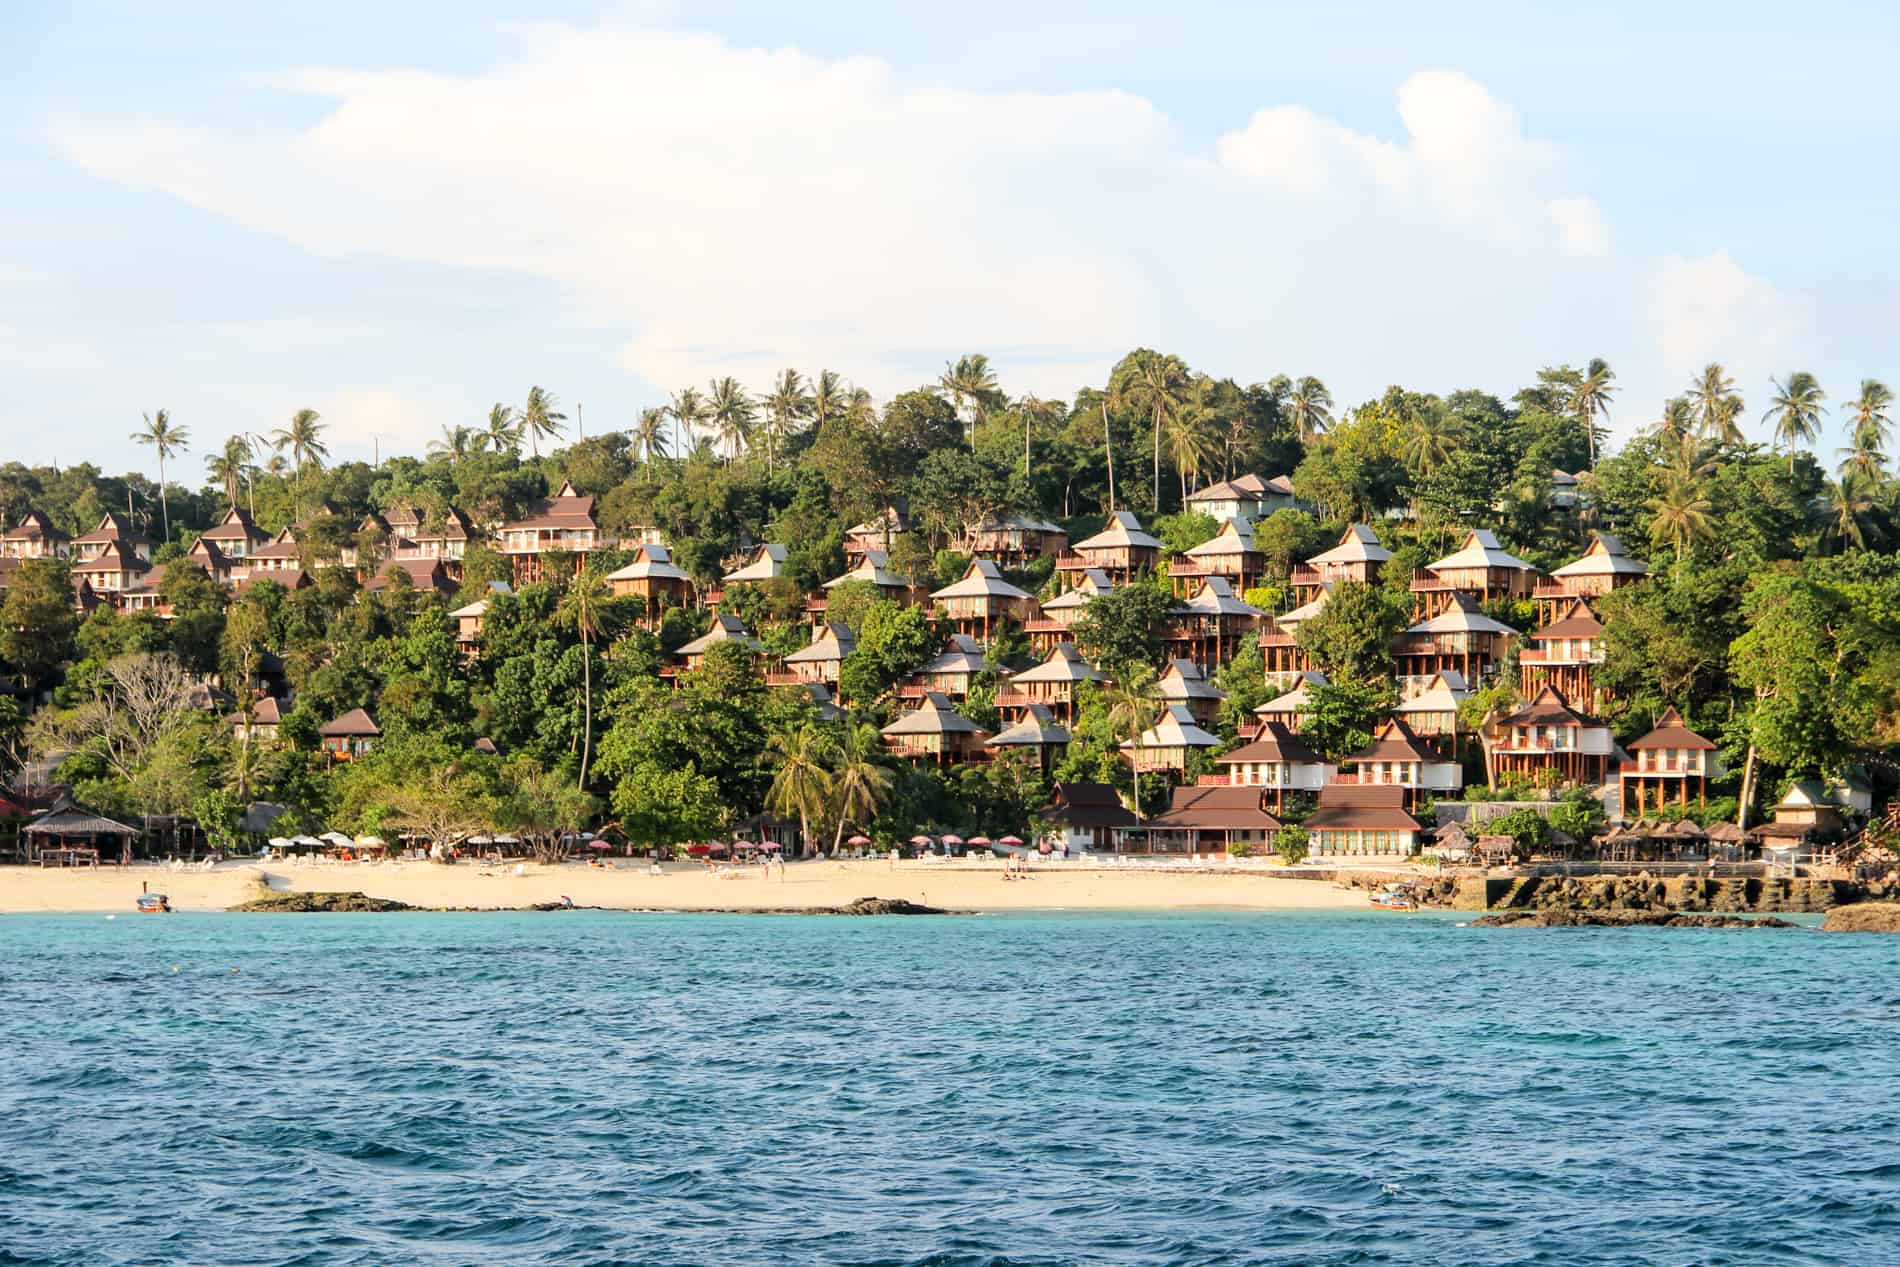 The jungle set, beachside luxury accomodations of the Koh Phi Phi Long Beach Resort. 